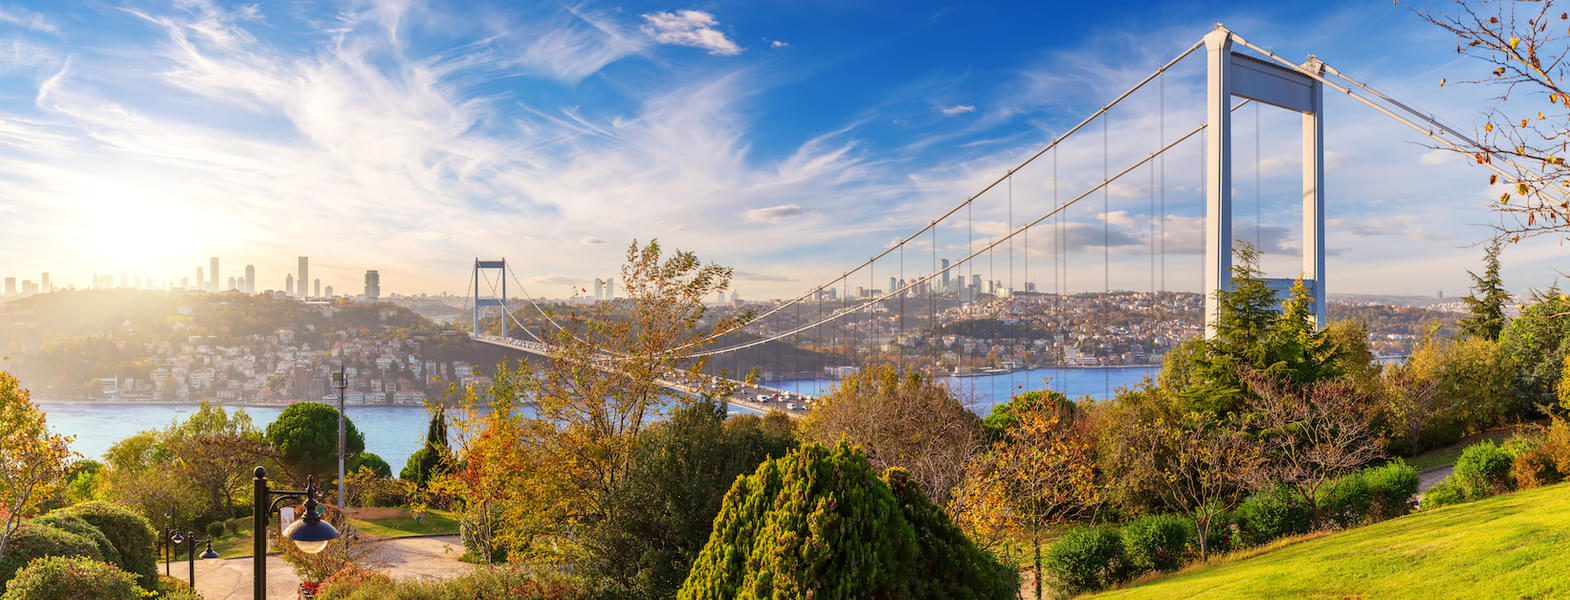 Visit the Bosphorus Bridge of Istanbul